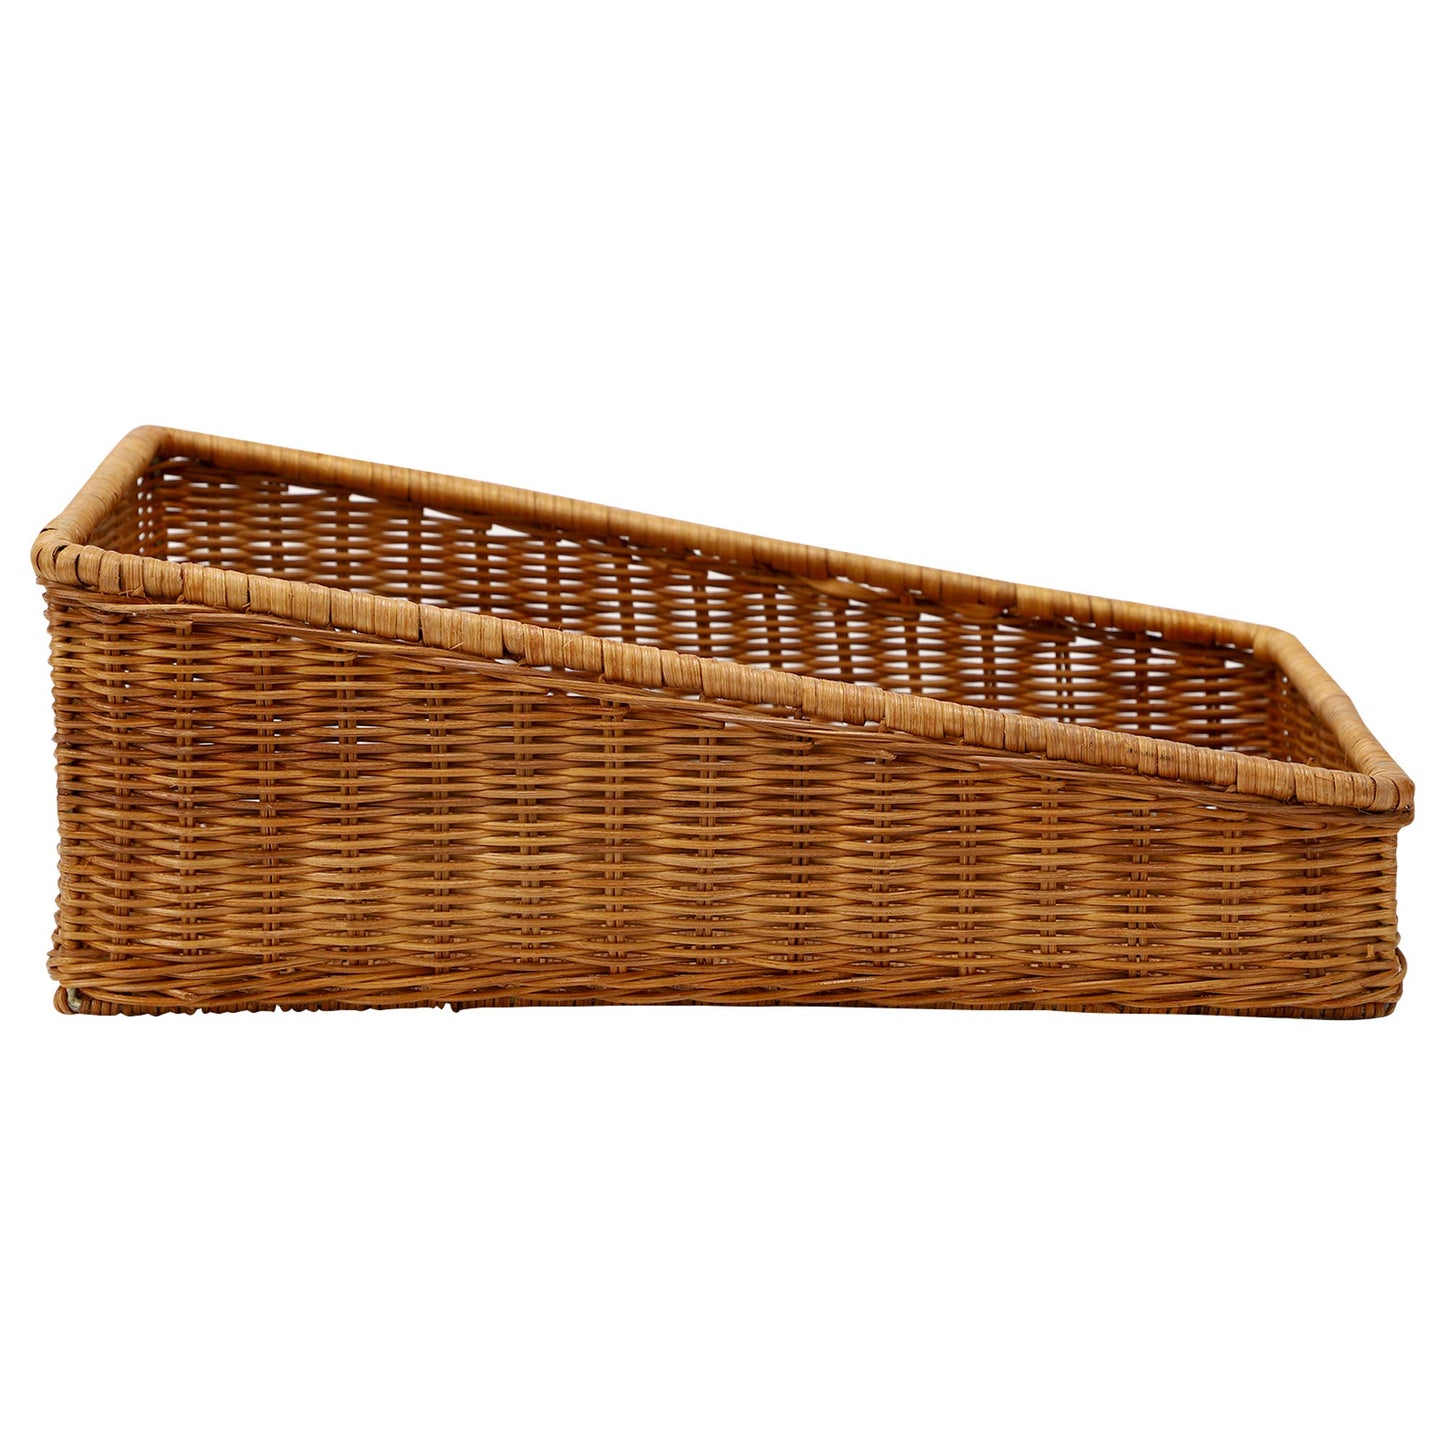 AKWAY Wicker Basket Organizer Basket suitable for Cloth, Storage Basket, Bin Organizer for Toiletry Towels Toys Bathroom Organizer Bread Basket Vegetable Basket (16" L x 12" W x 6" H, Brown) - Akway